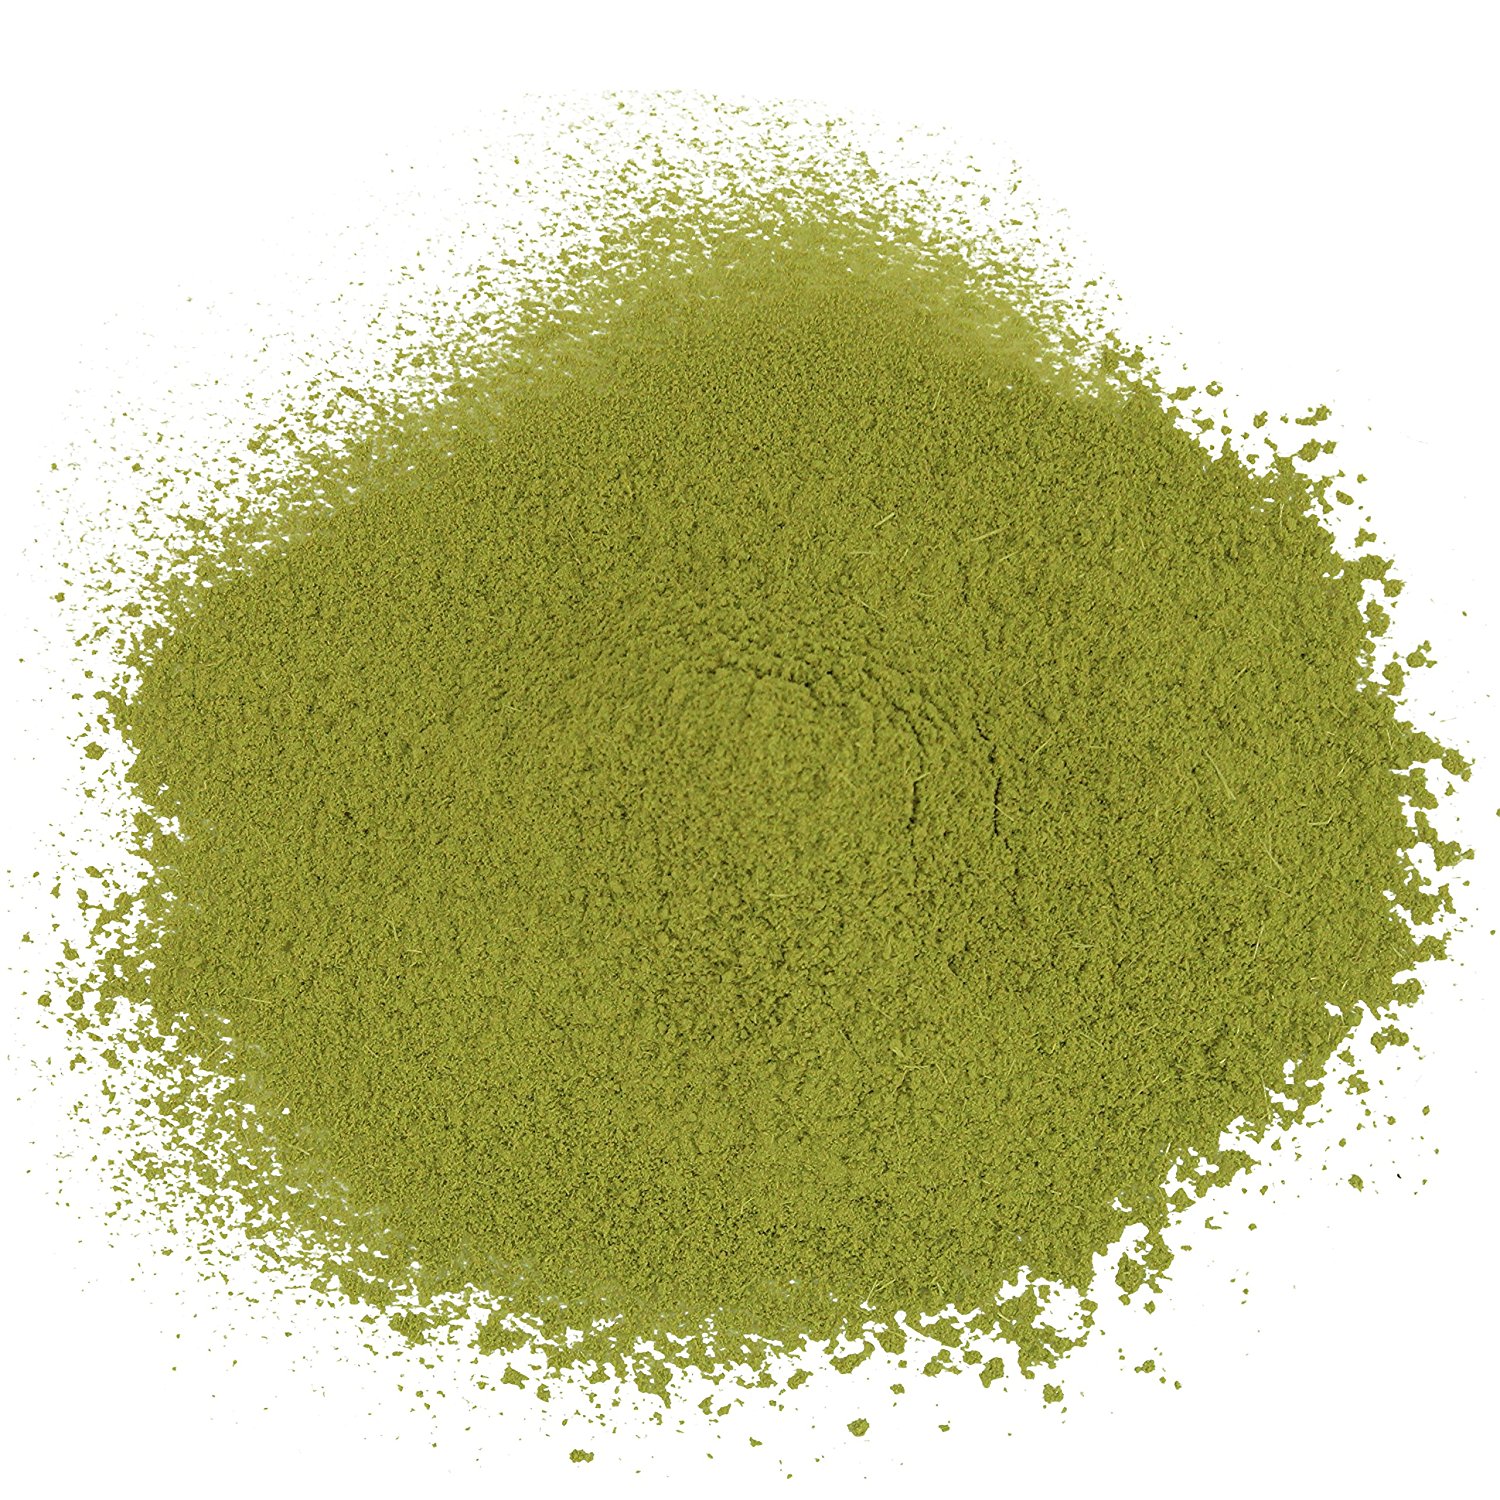 Teas Unique Korean Boseong Second Flush 2016 Organic Green Tea Powder (Matcha)